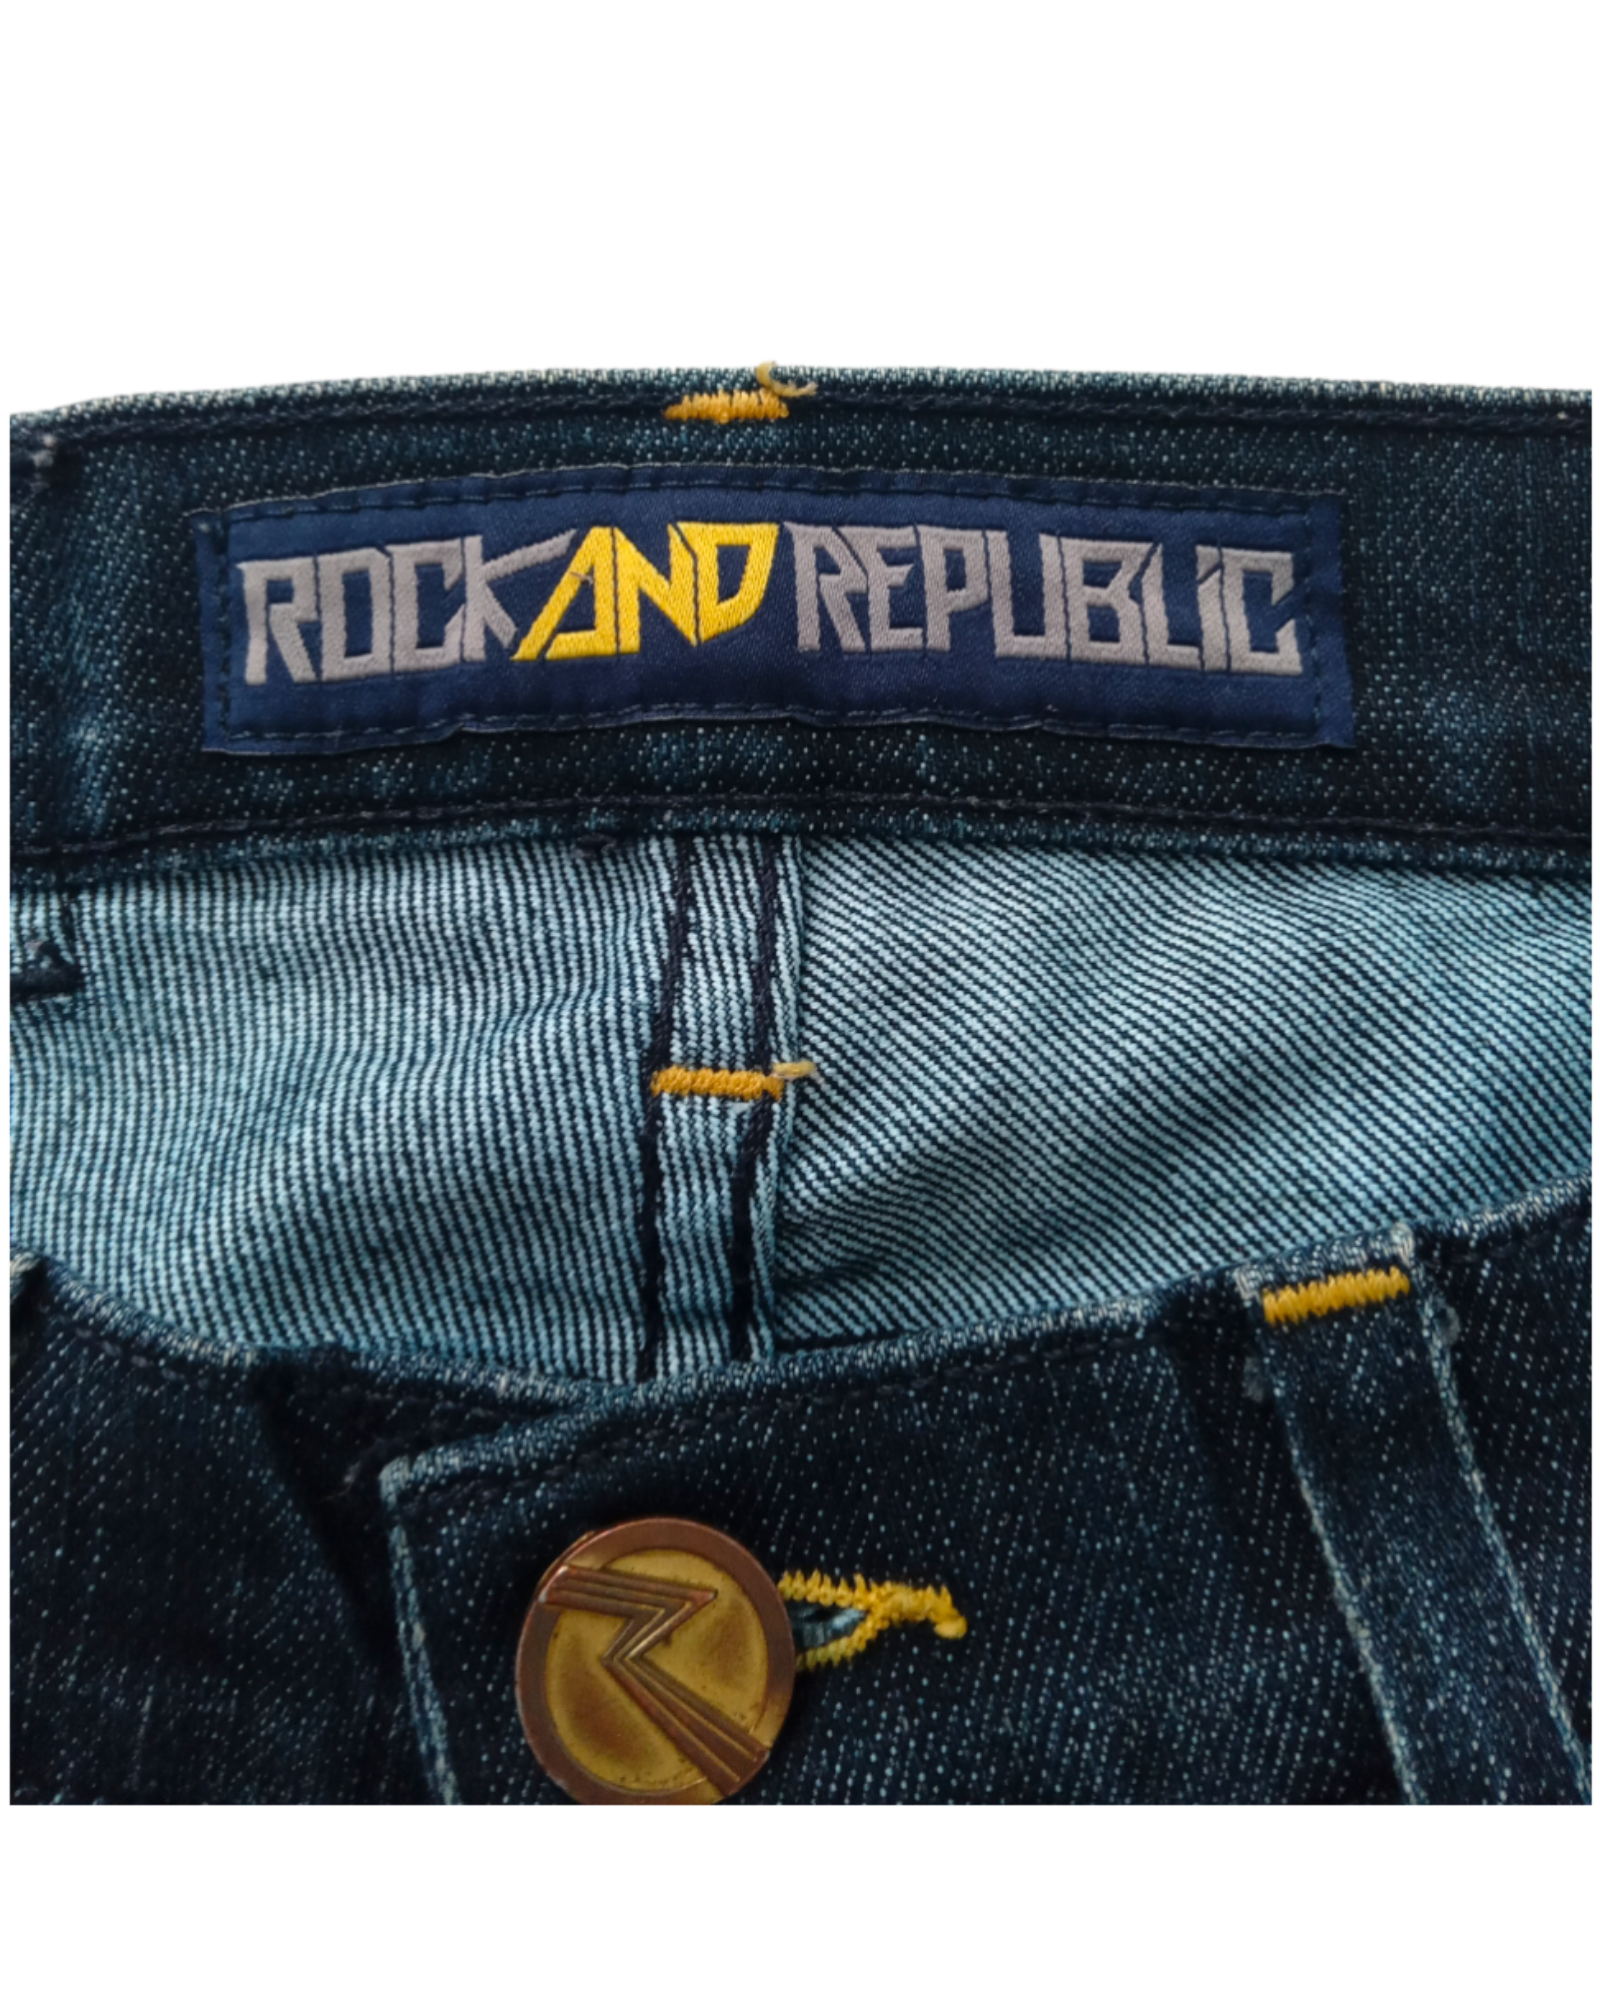 Jeans Rectos Rock andre republic 